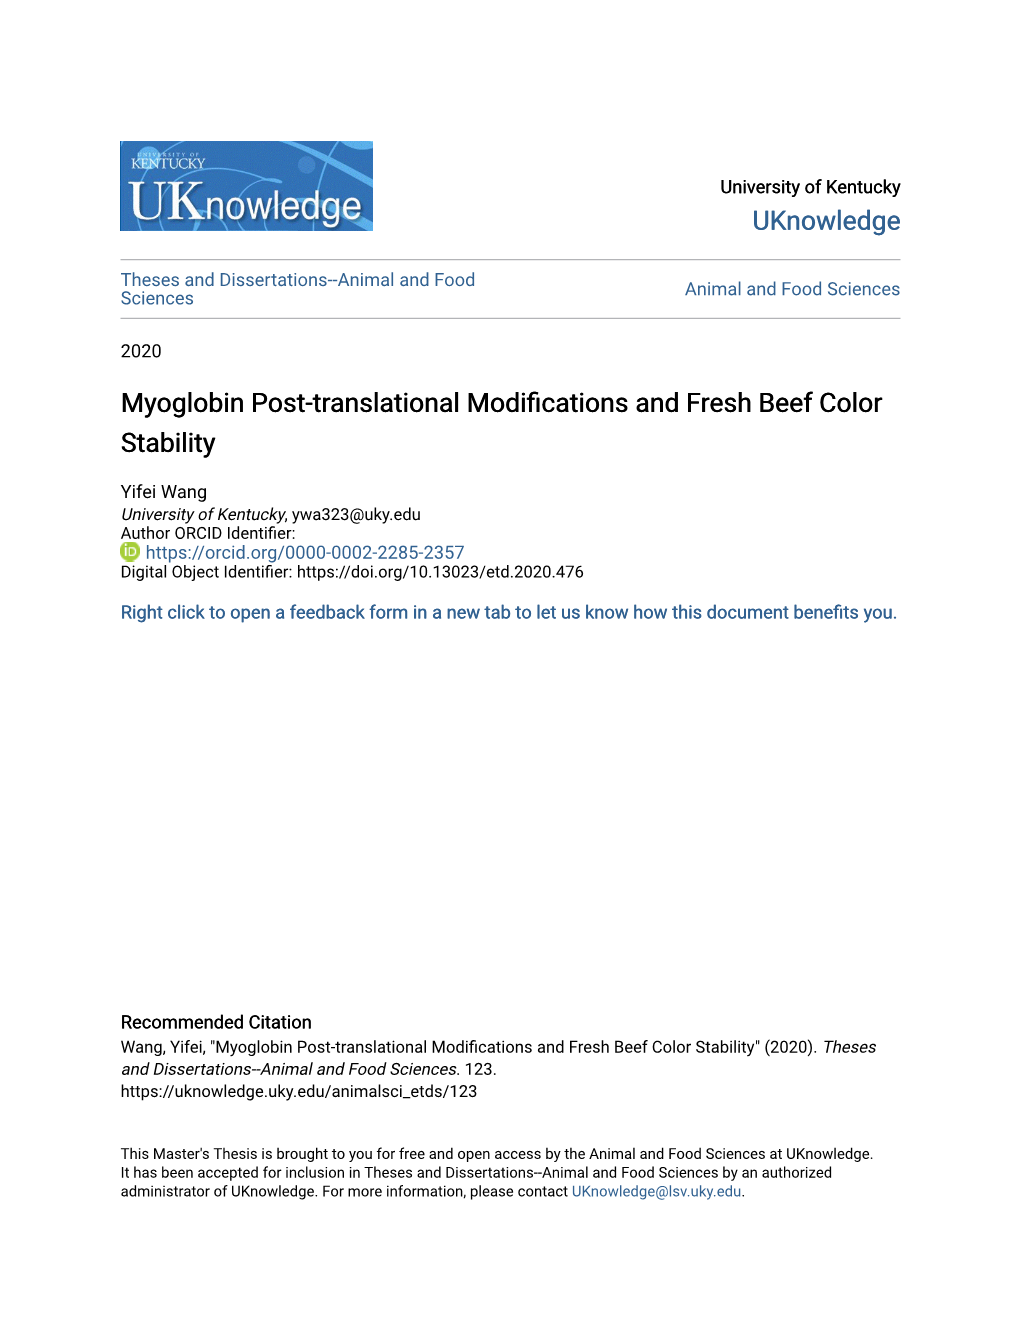 Myoglobin Post-Translational Modifications and Fresh Beef Color Stability